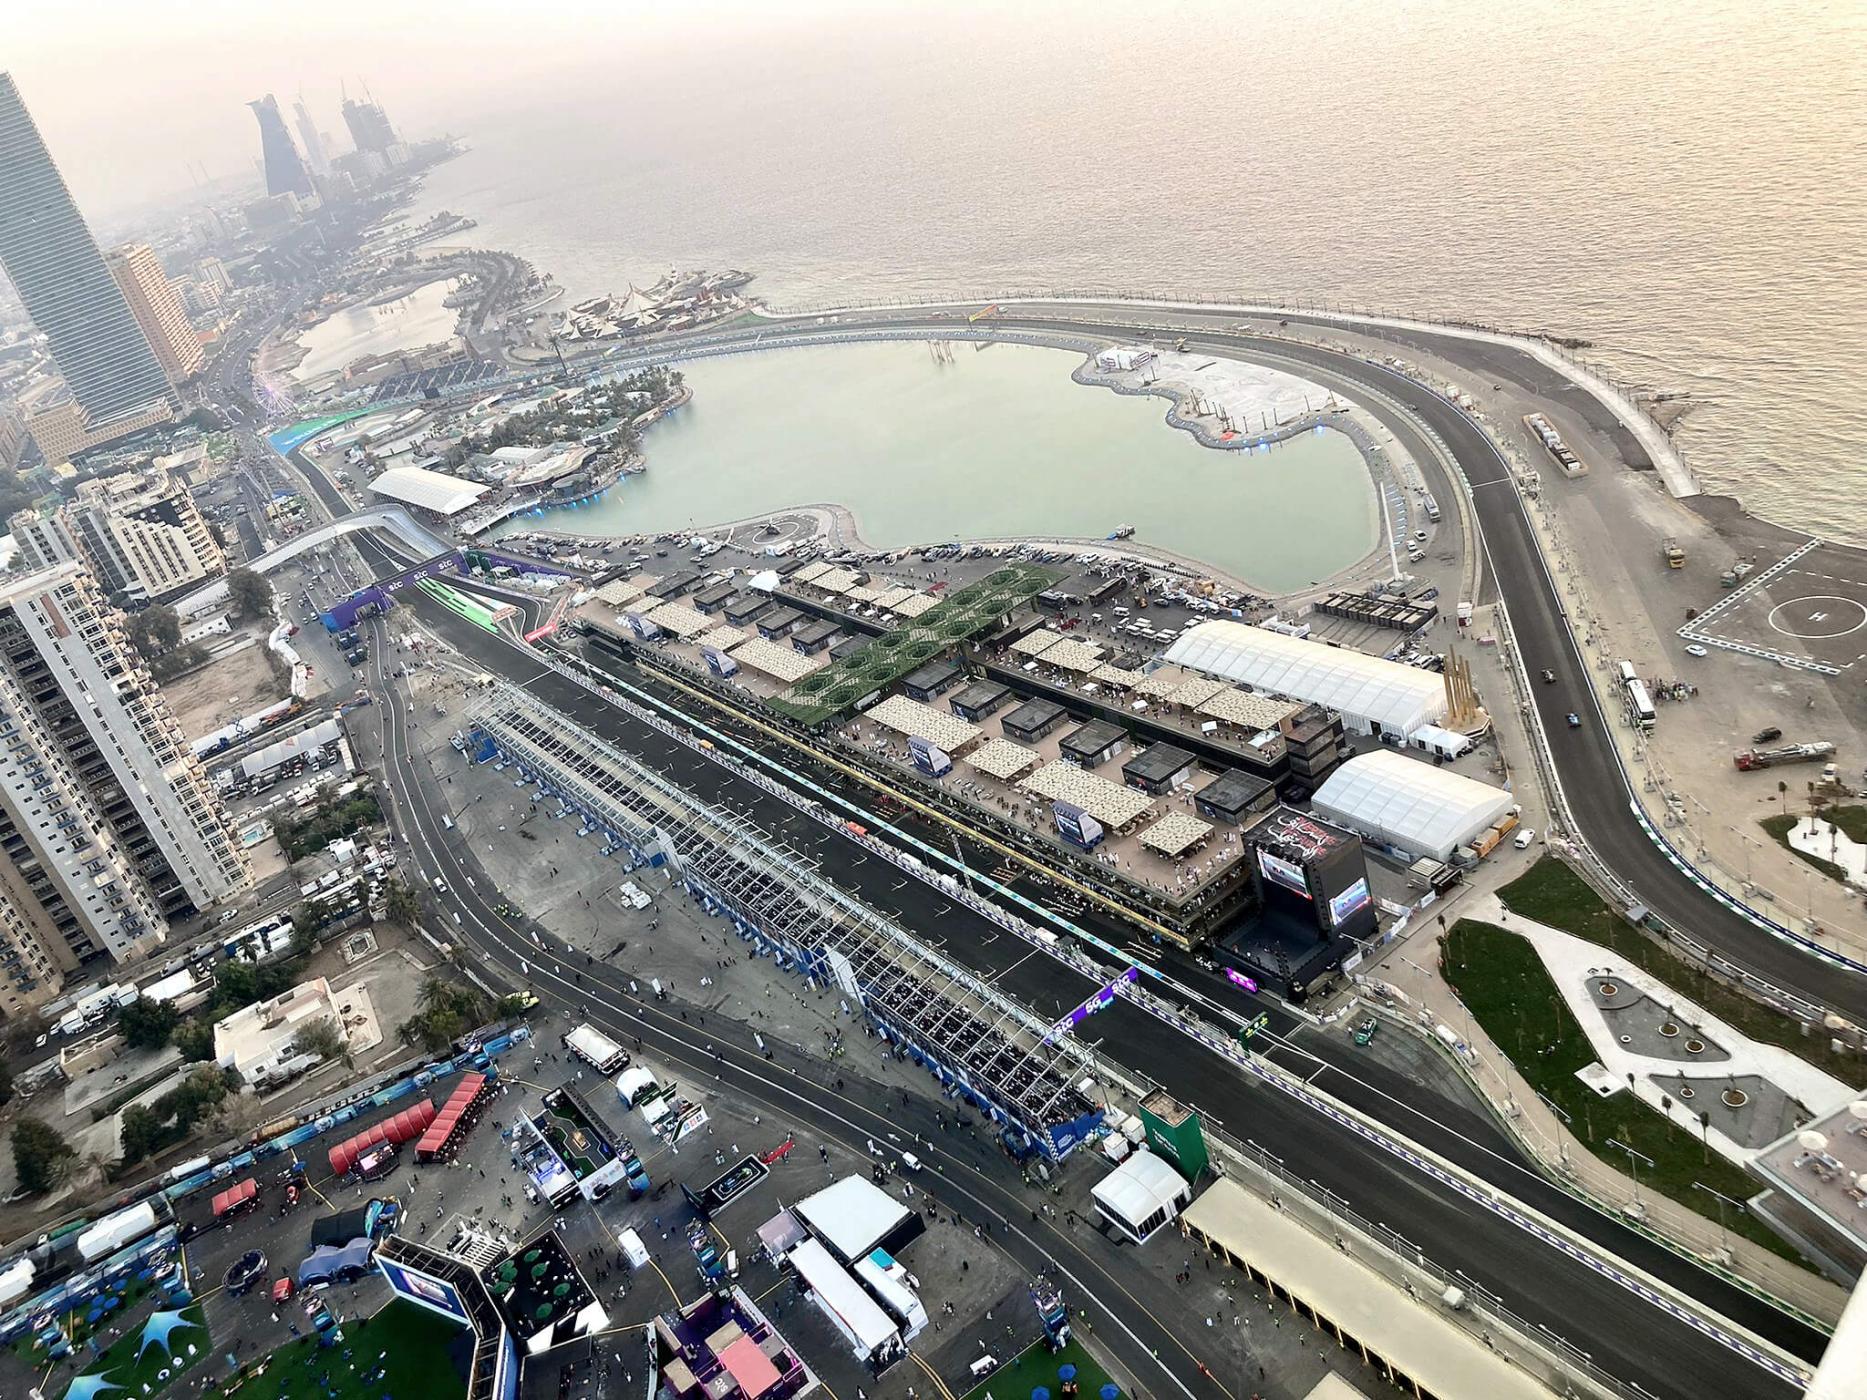 Jeddah Corniche Circuit